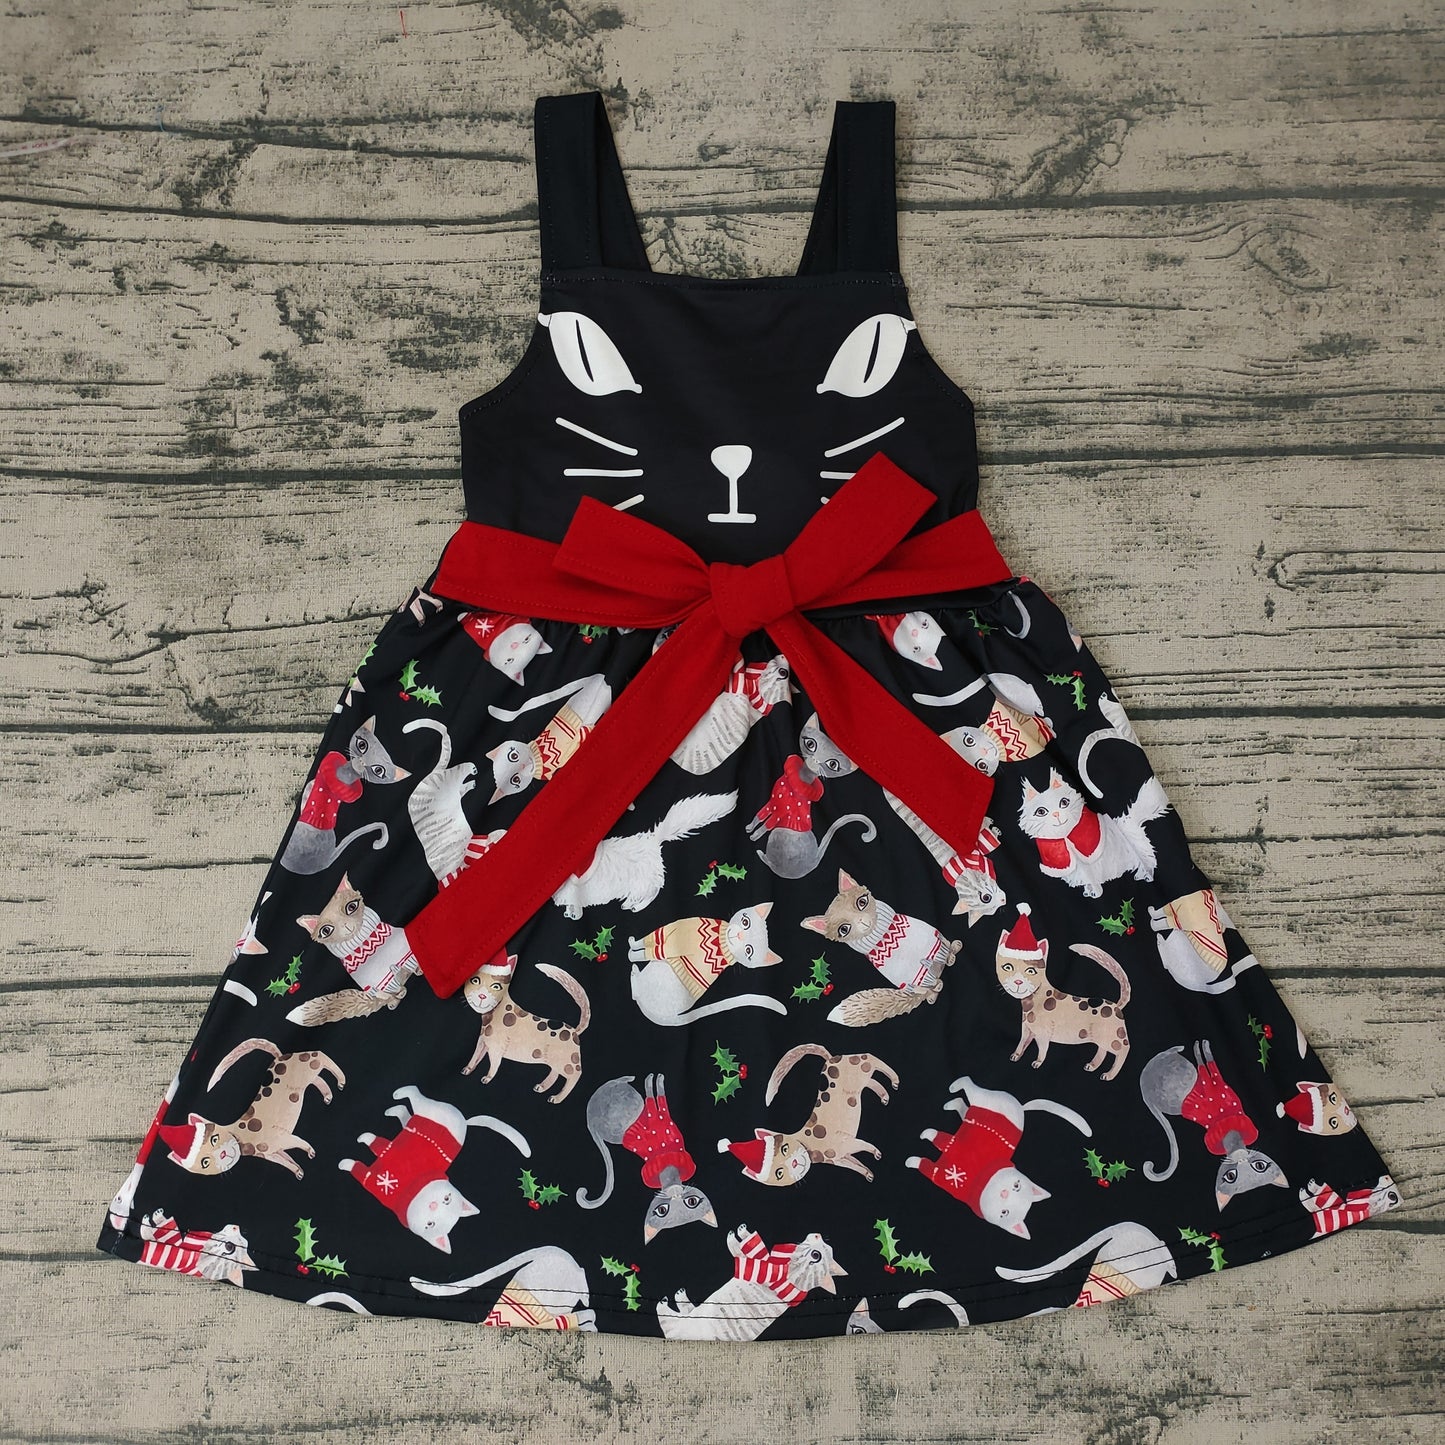 Baby girls cat cartoon black dresses